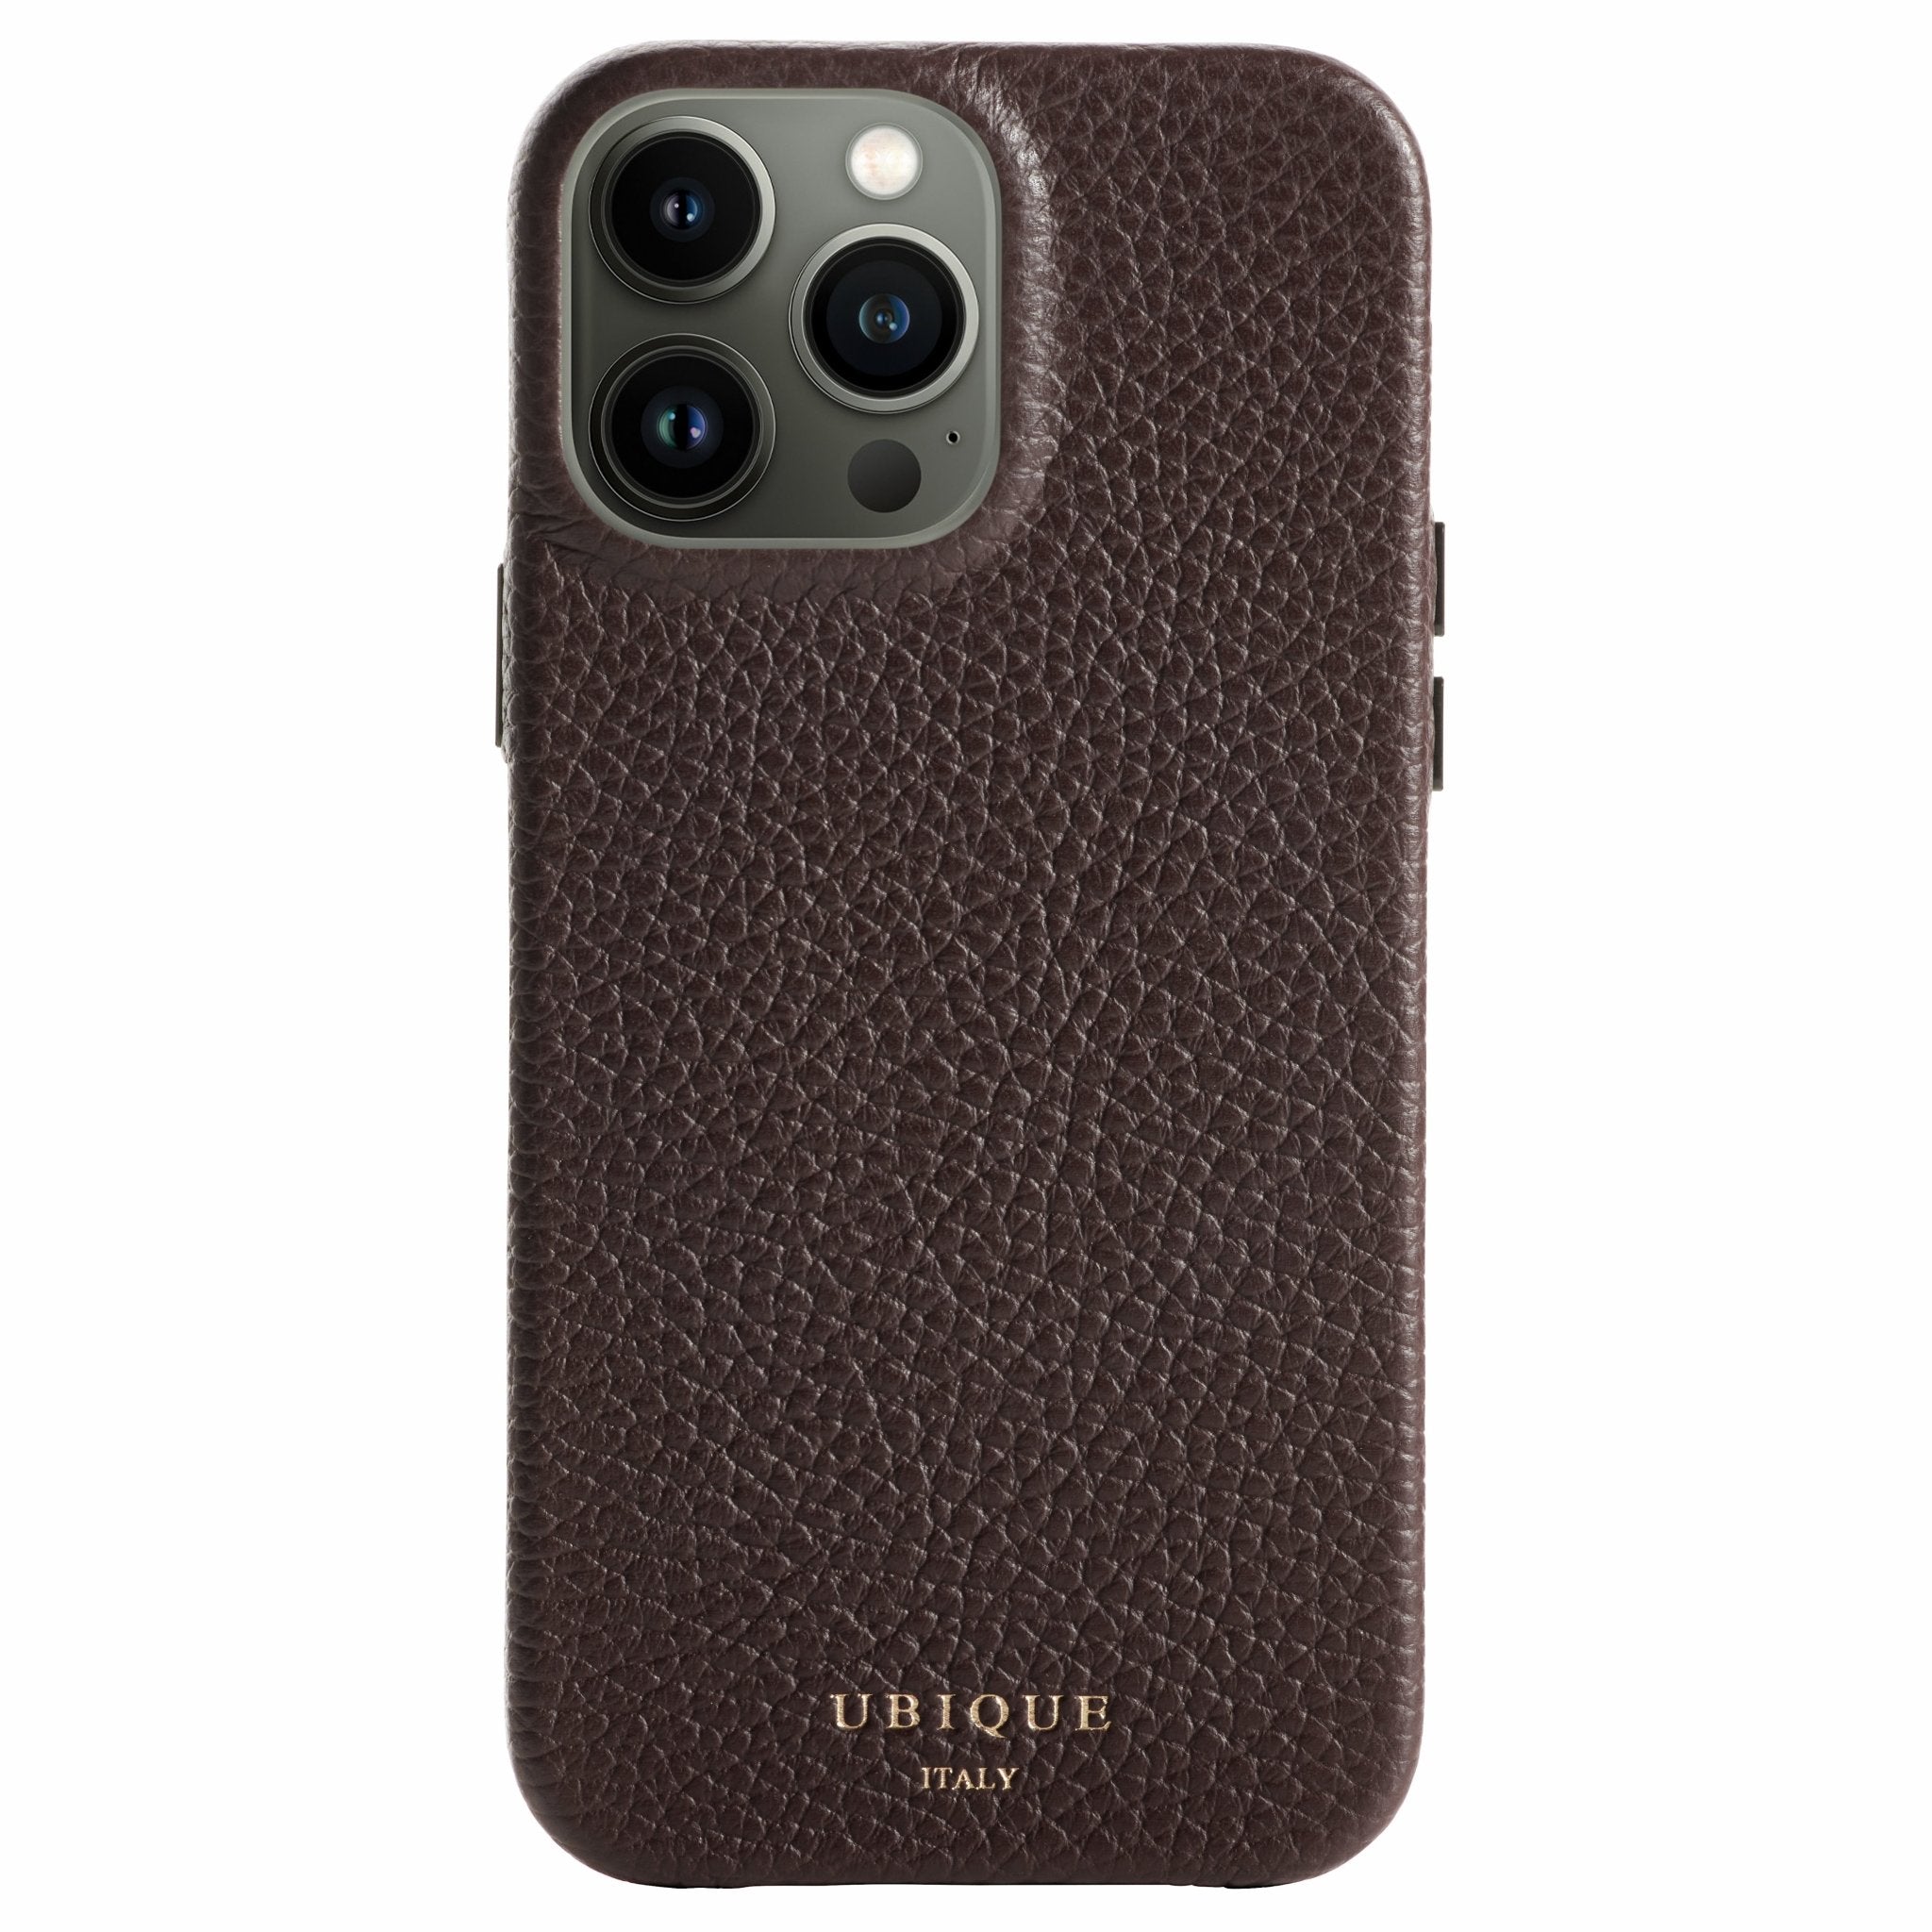 Ubique Italy Luxury iPhone Case 13 Pro Max Pebble Grain Leather Dark Walnut Front